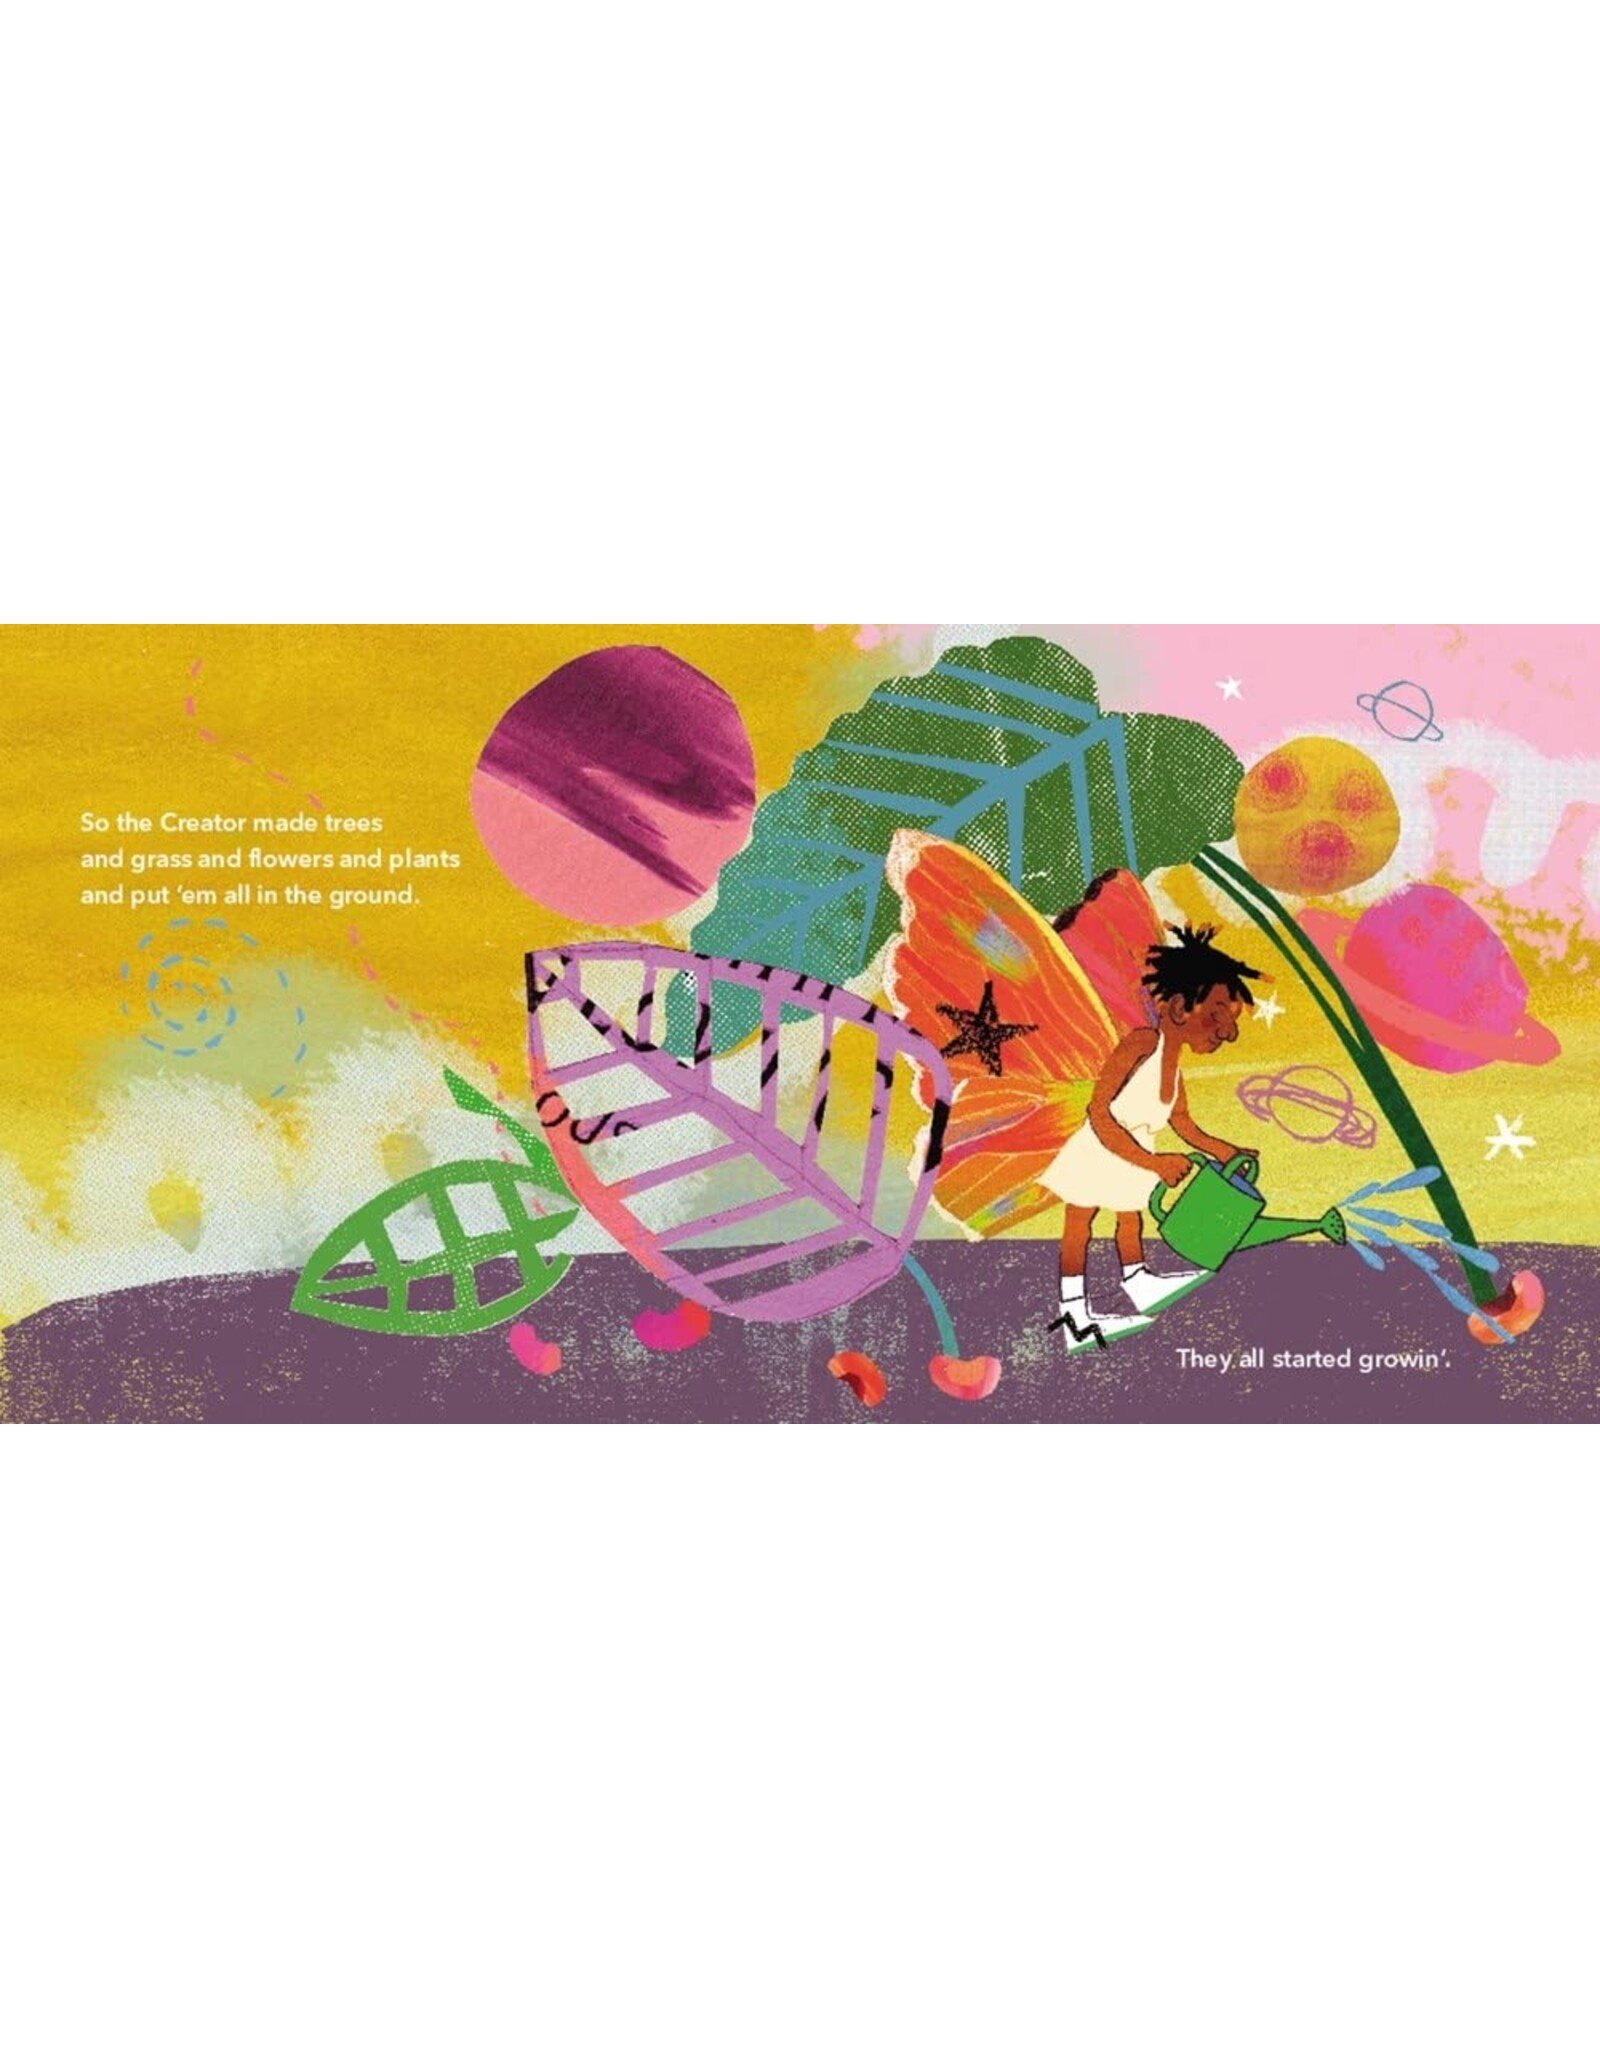 Children's Books The Making of Butterflies